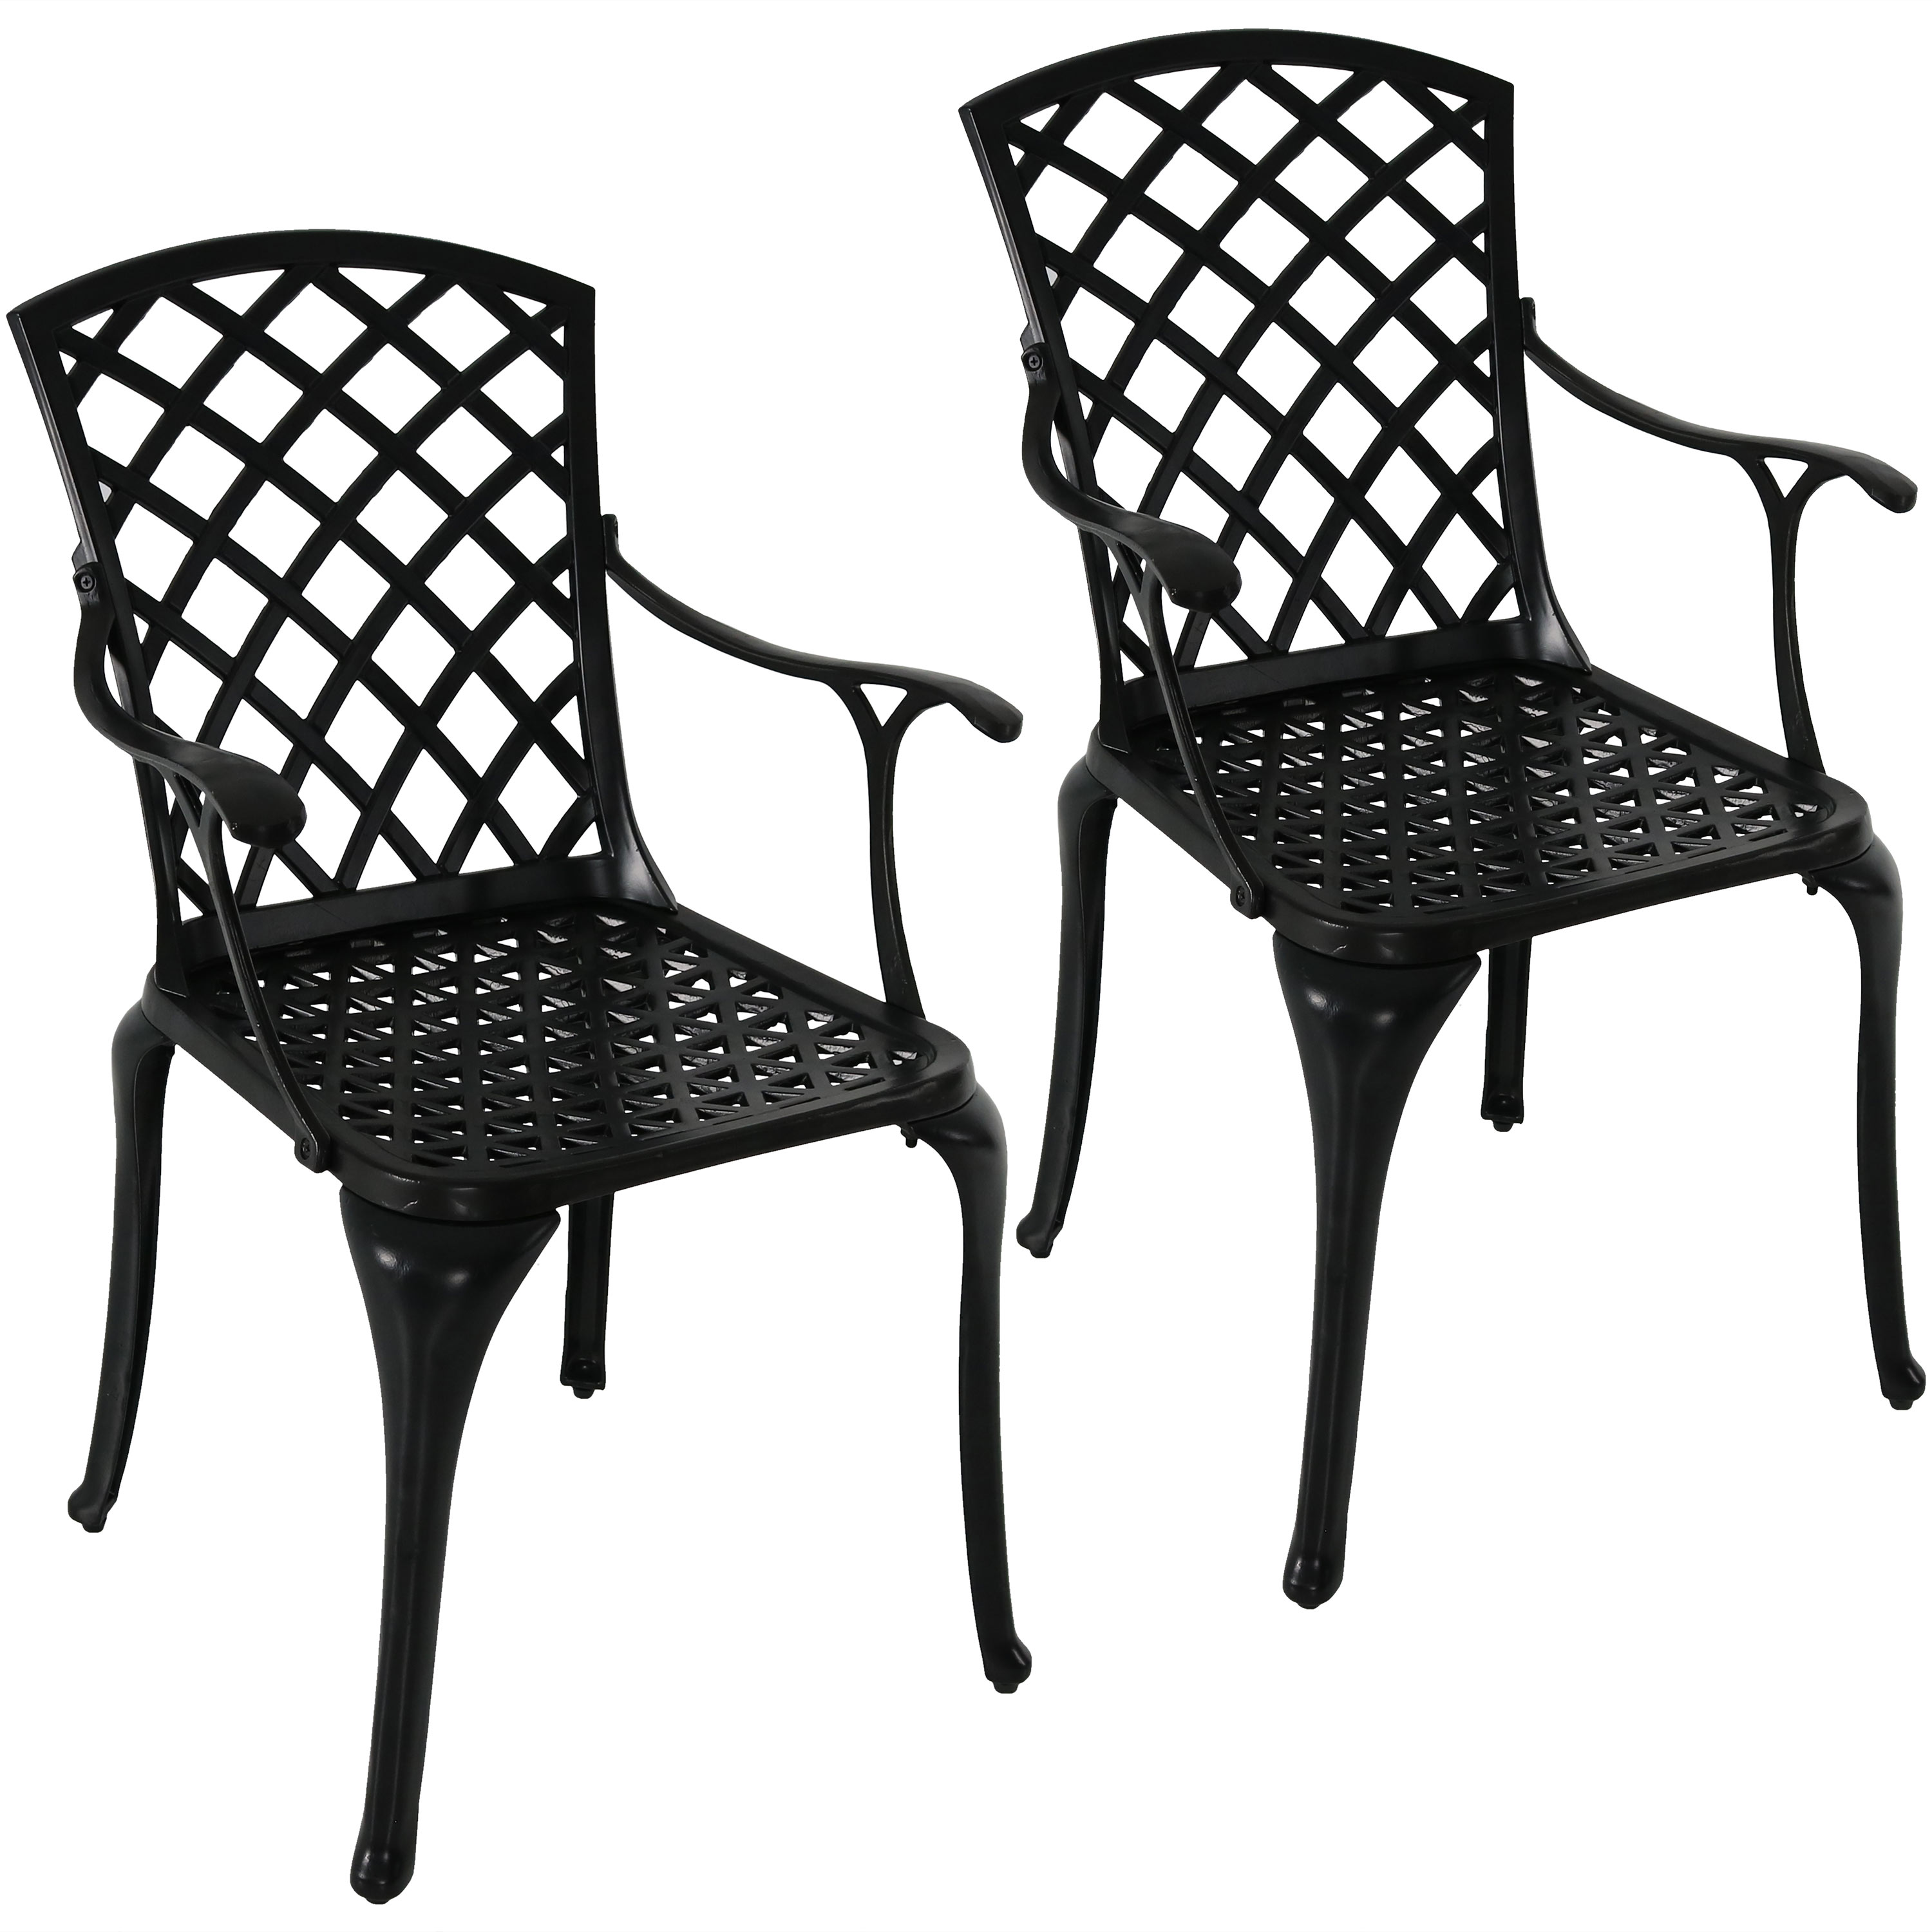 Sunnydaze Patio Chairs - Set of 2 - Cast Aluminum with Crossweave Design